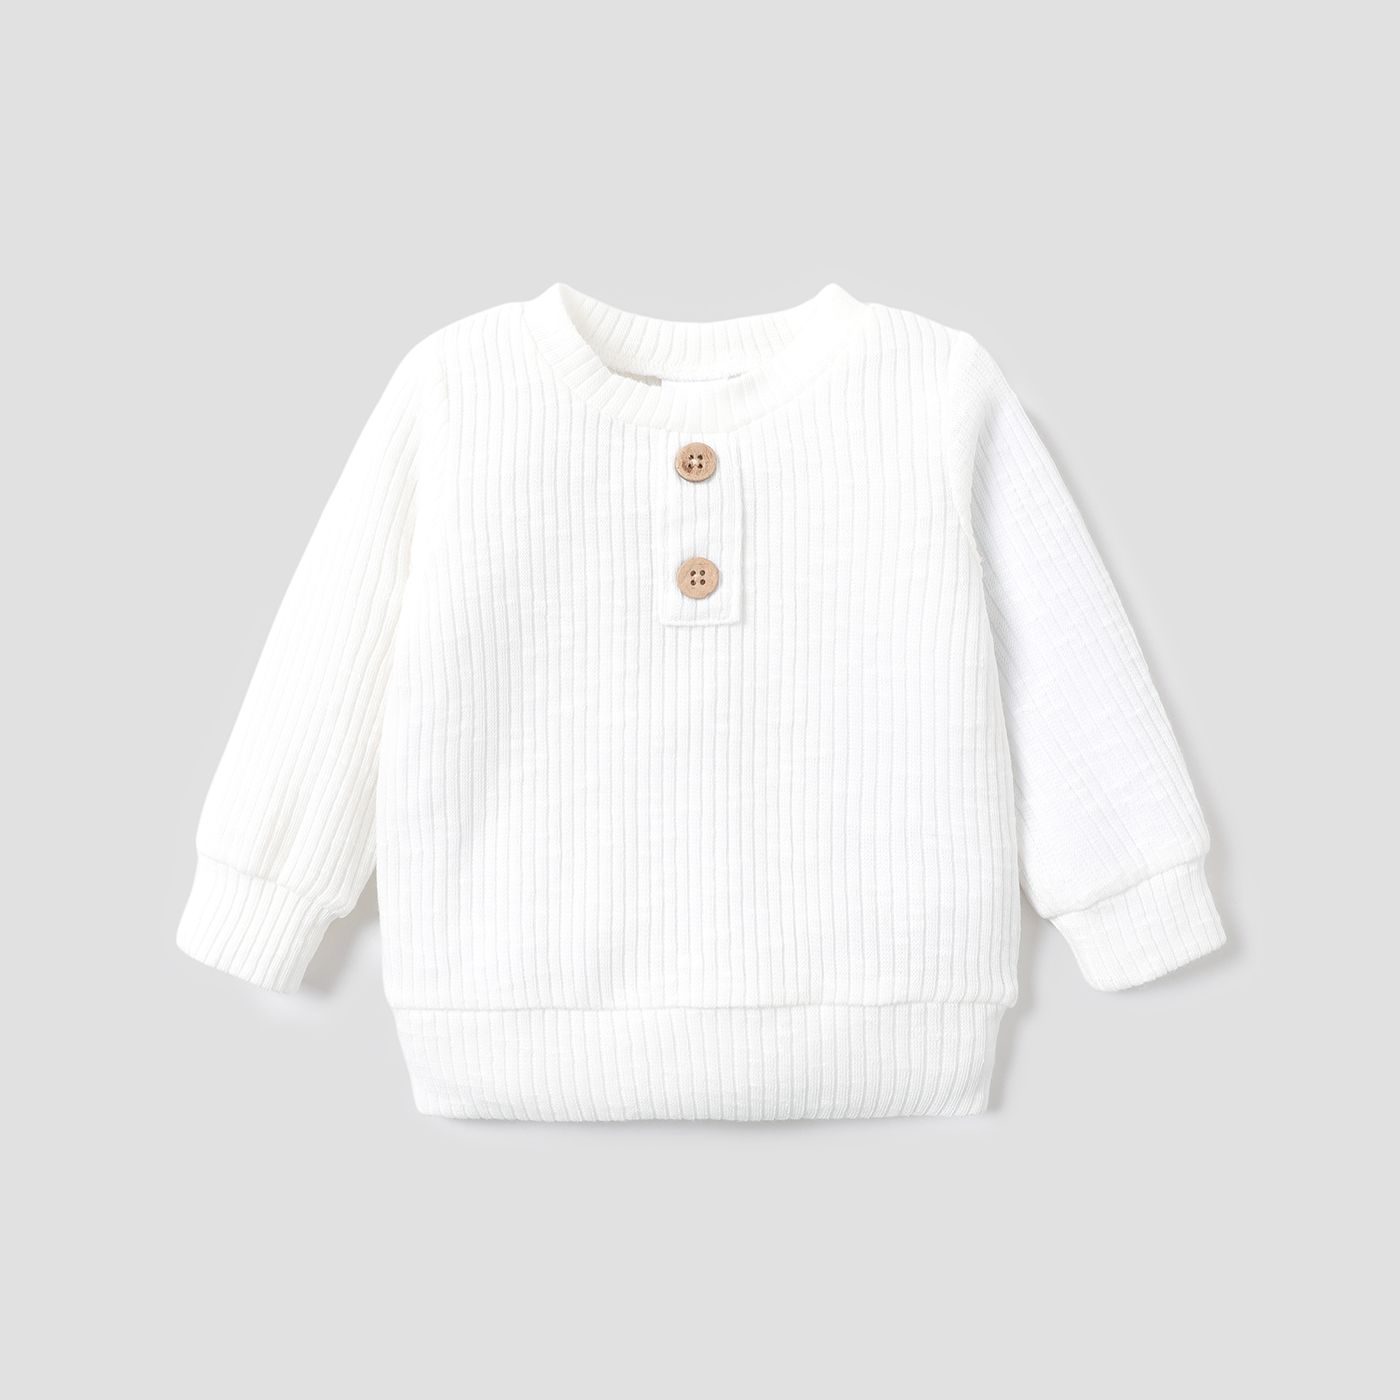 Baby Boy/Girl Solid Color Casual  Long Sleeves Jacke/Tee Set